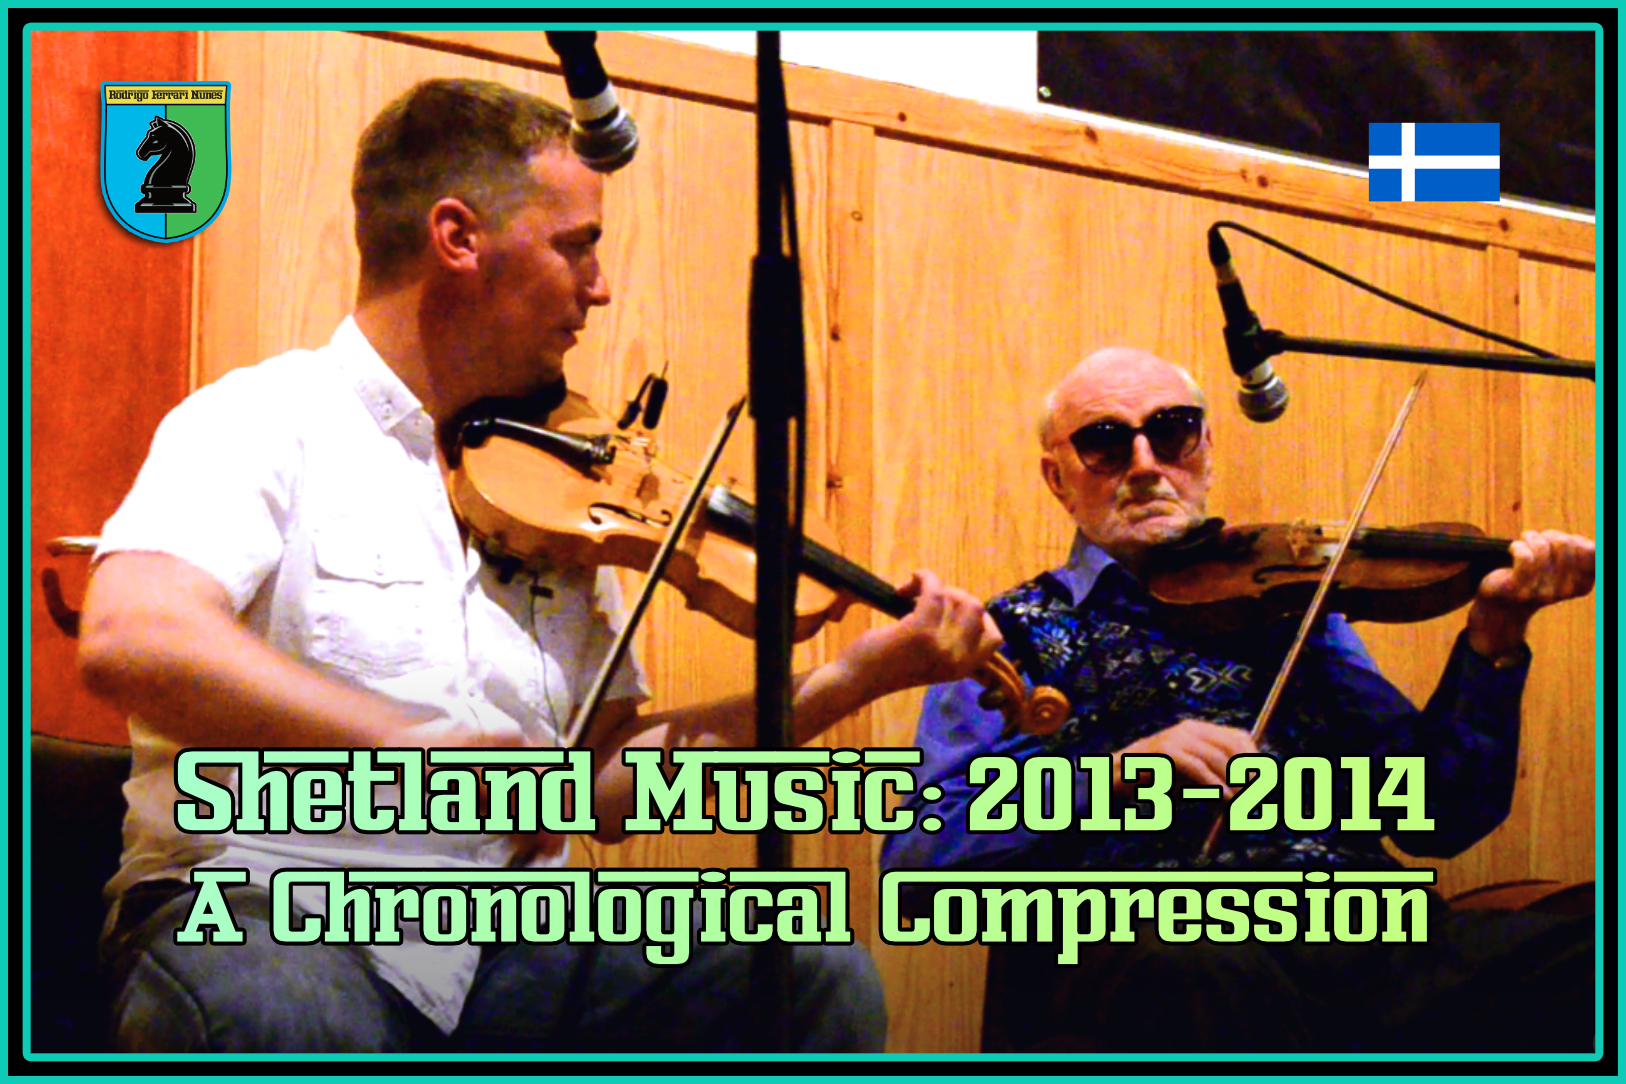 Shetland Music: 2013-2014 – A Chronological Compression